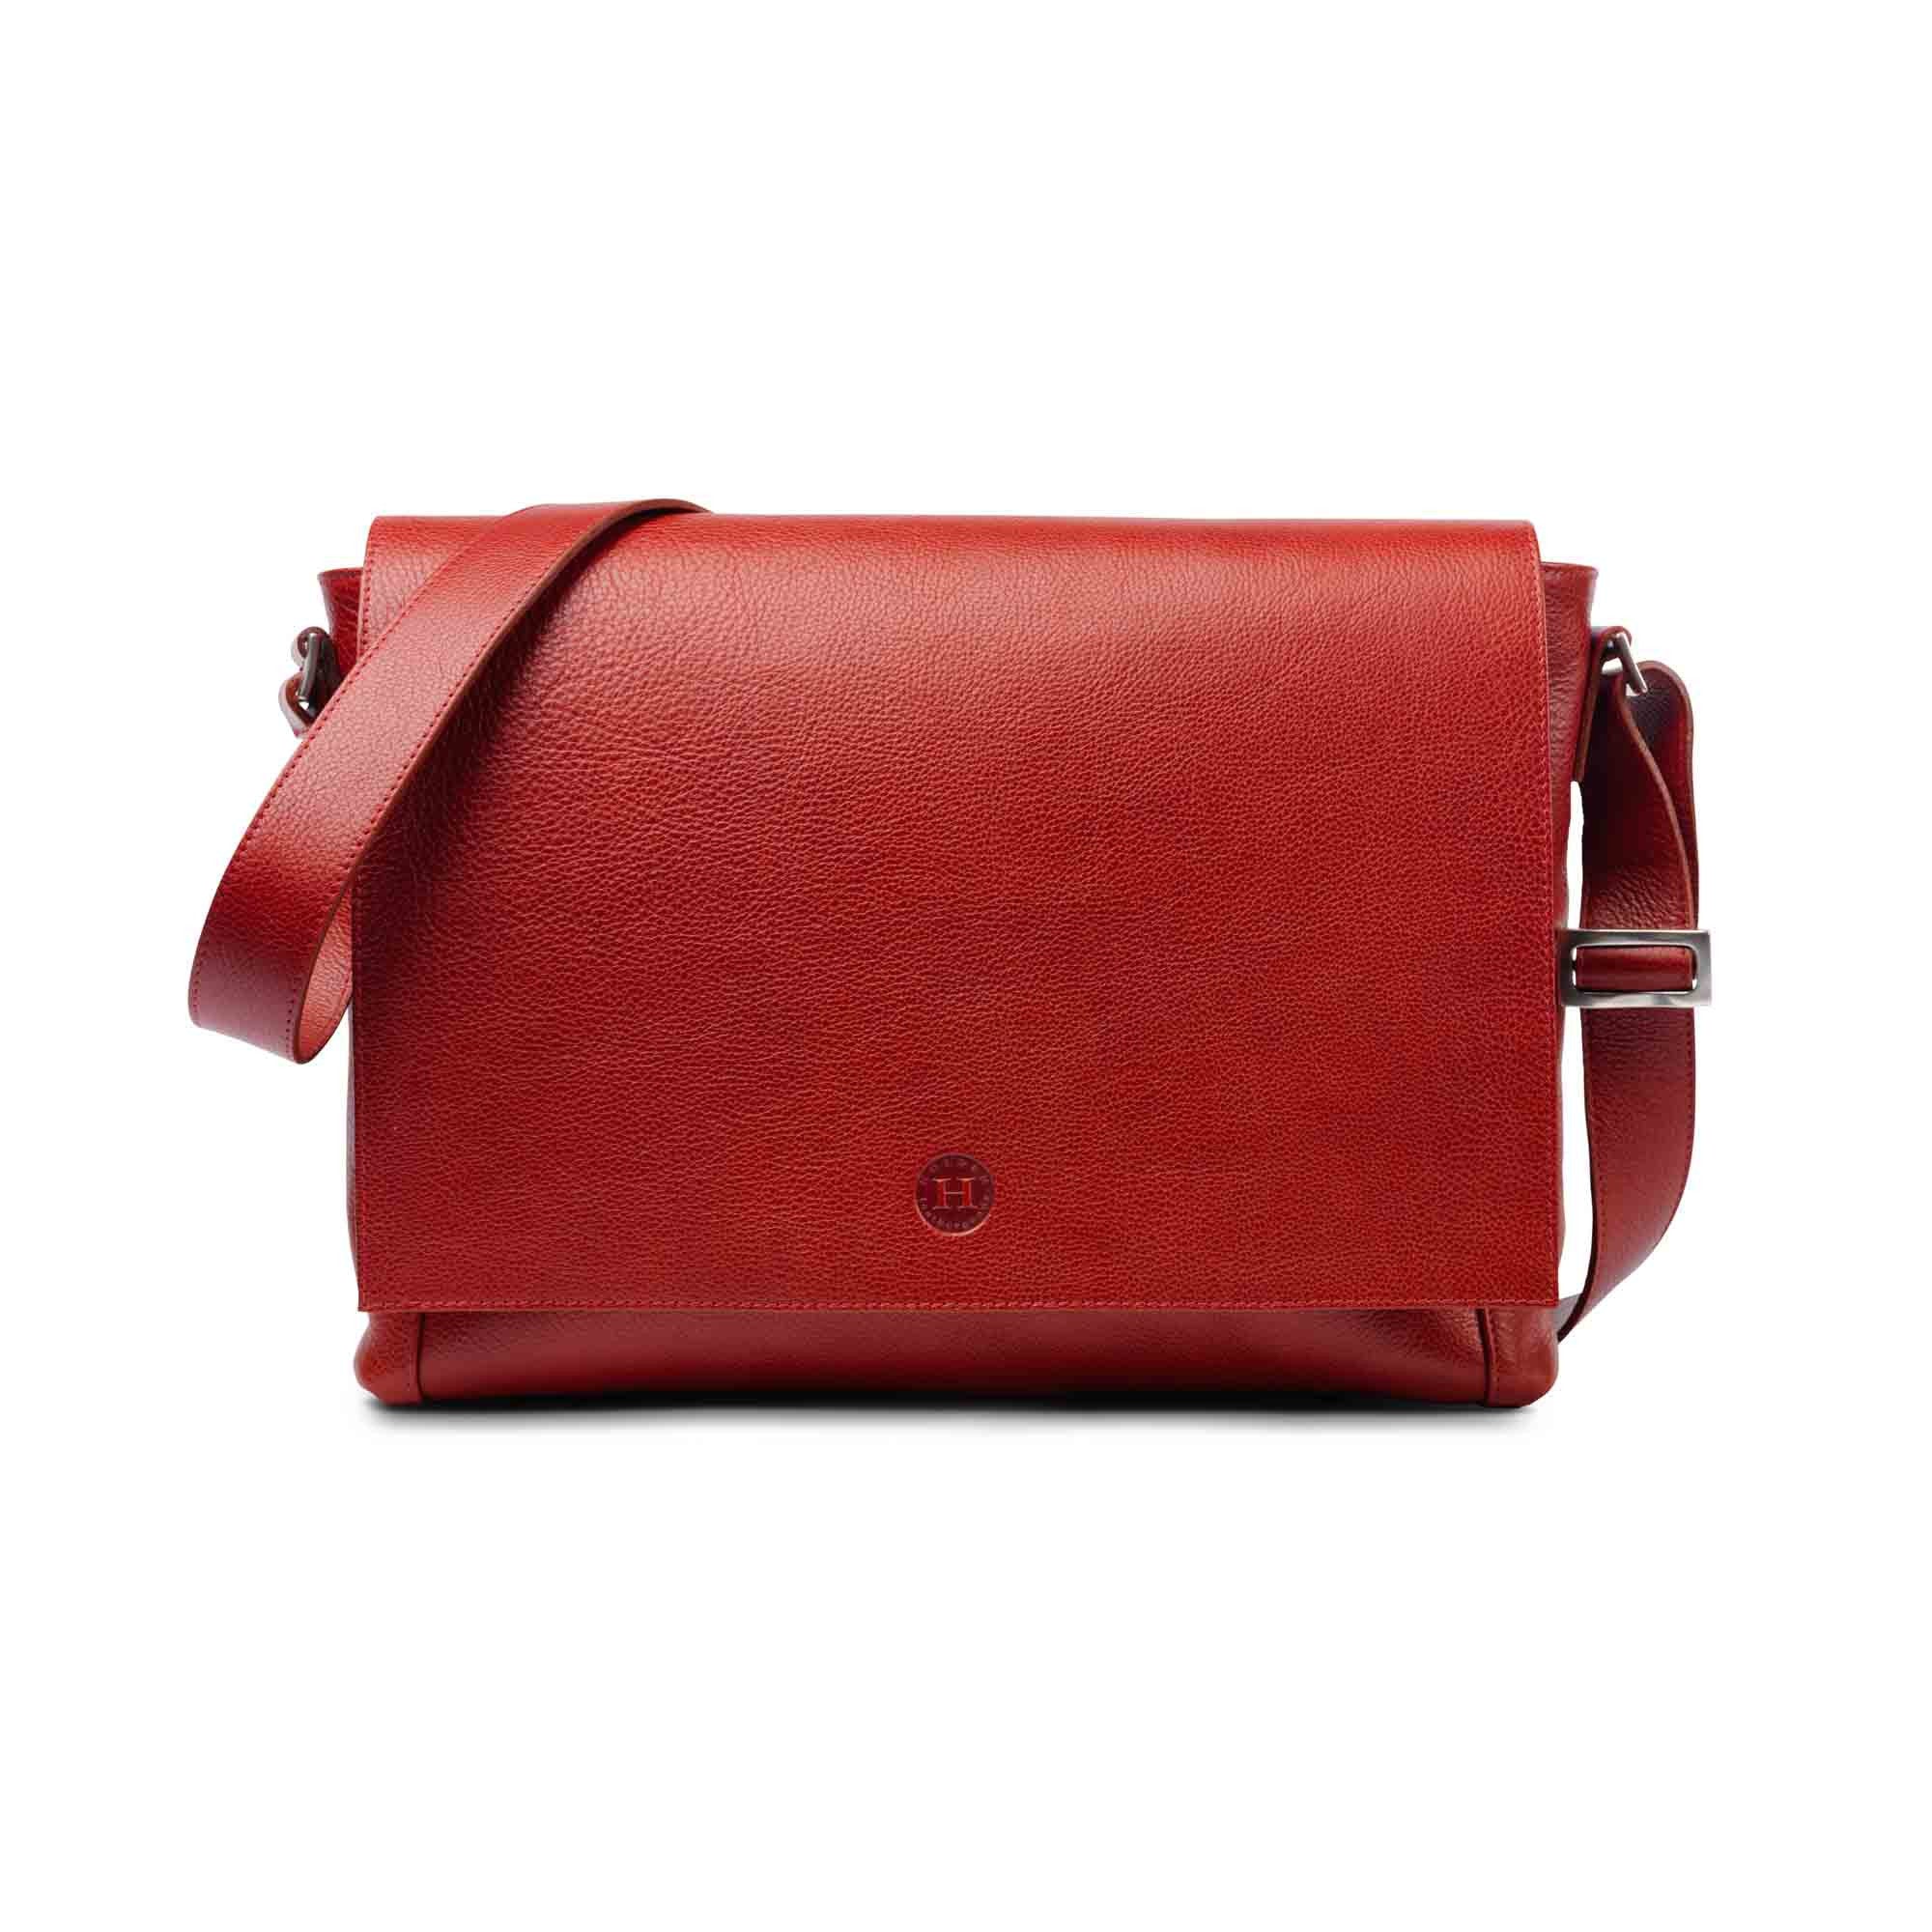 Holden Leather Laptop Messenger Bag Red - Holden Leathergoods, leather bags handmade in Ireland - 1